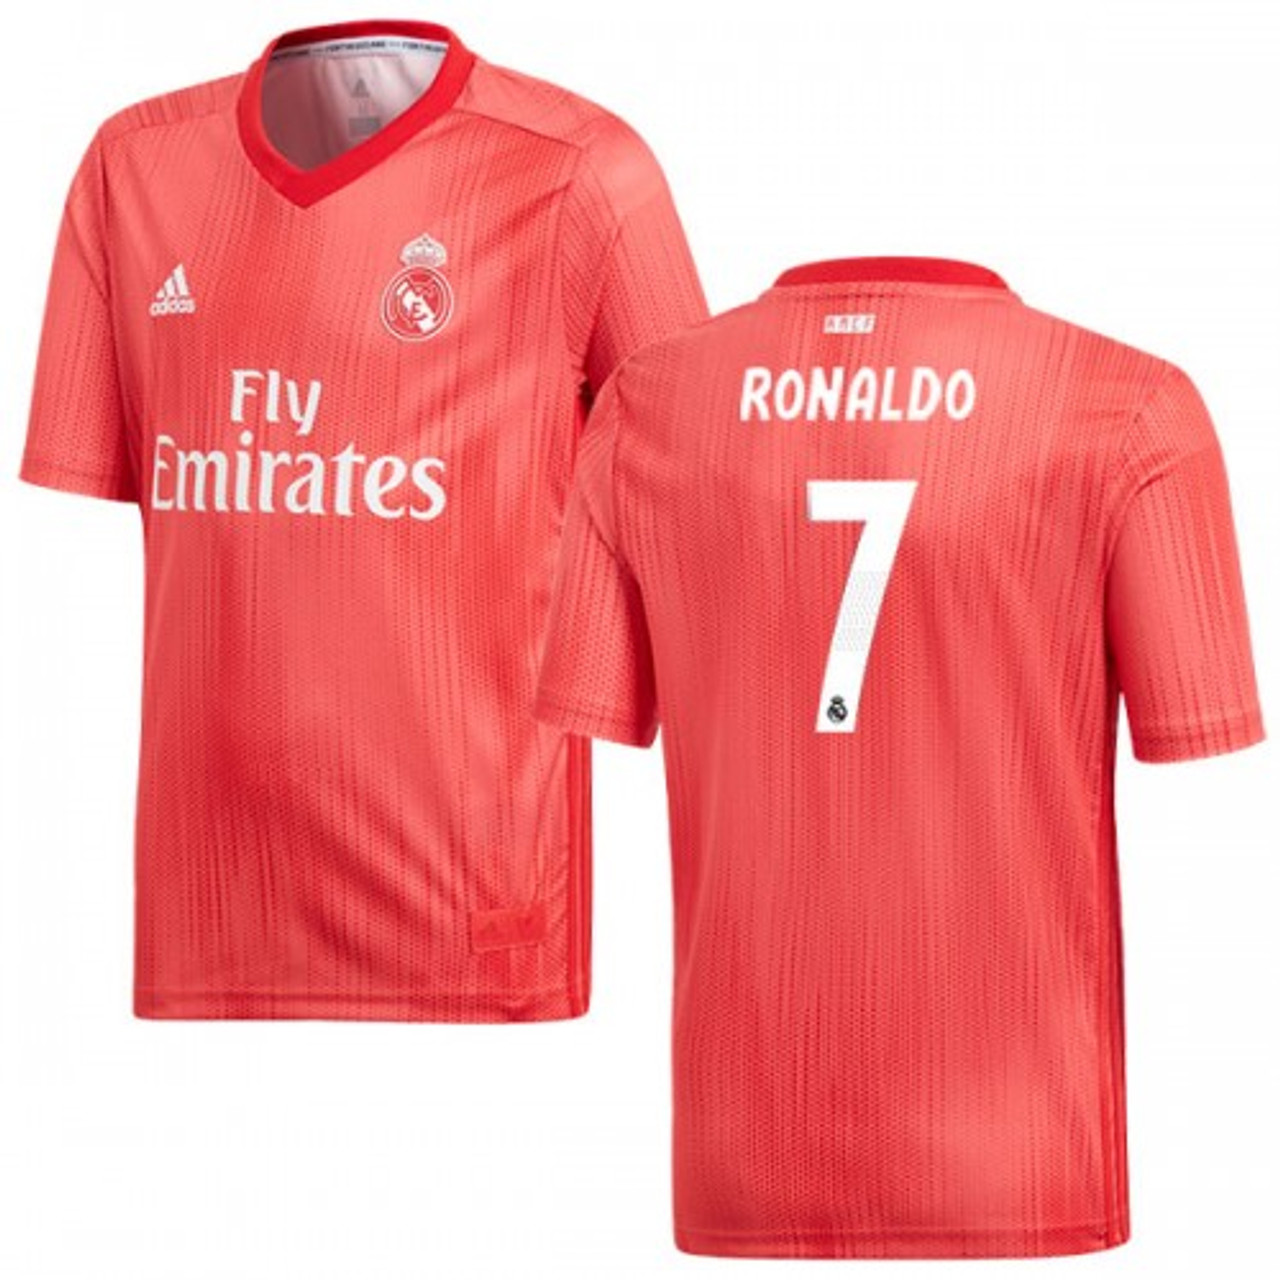 ronaldo jersey red